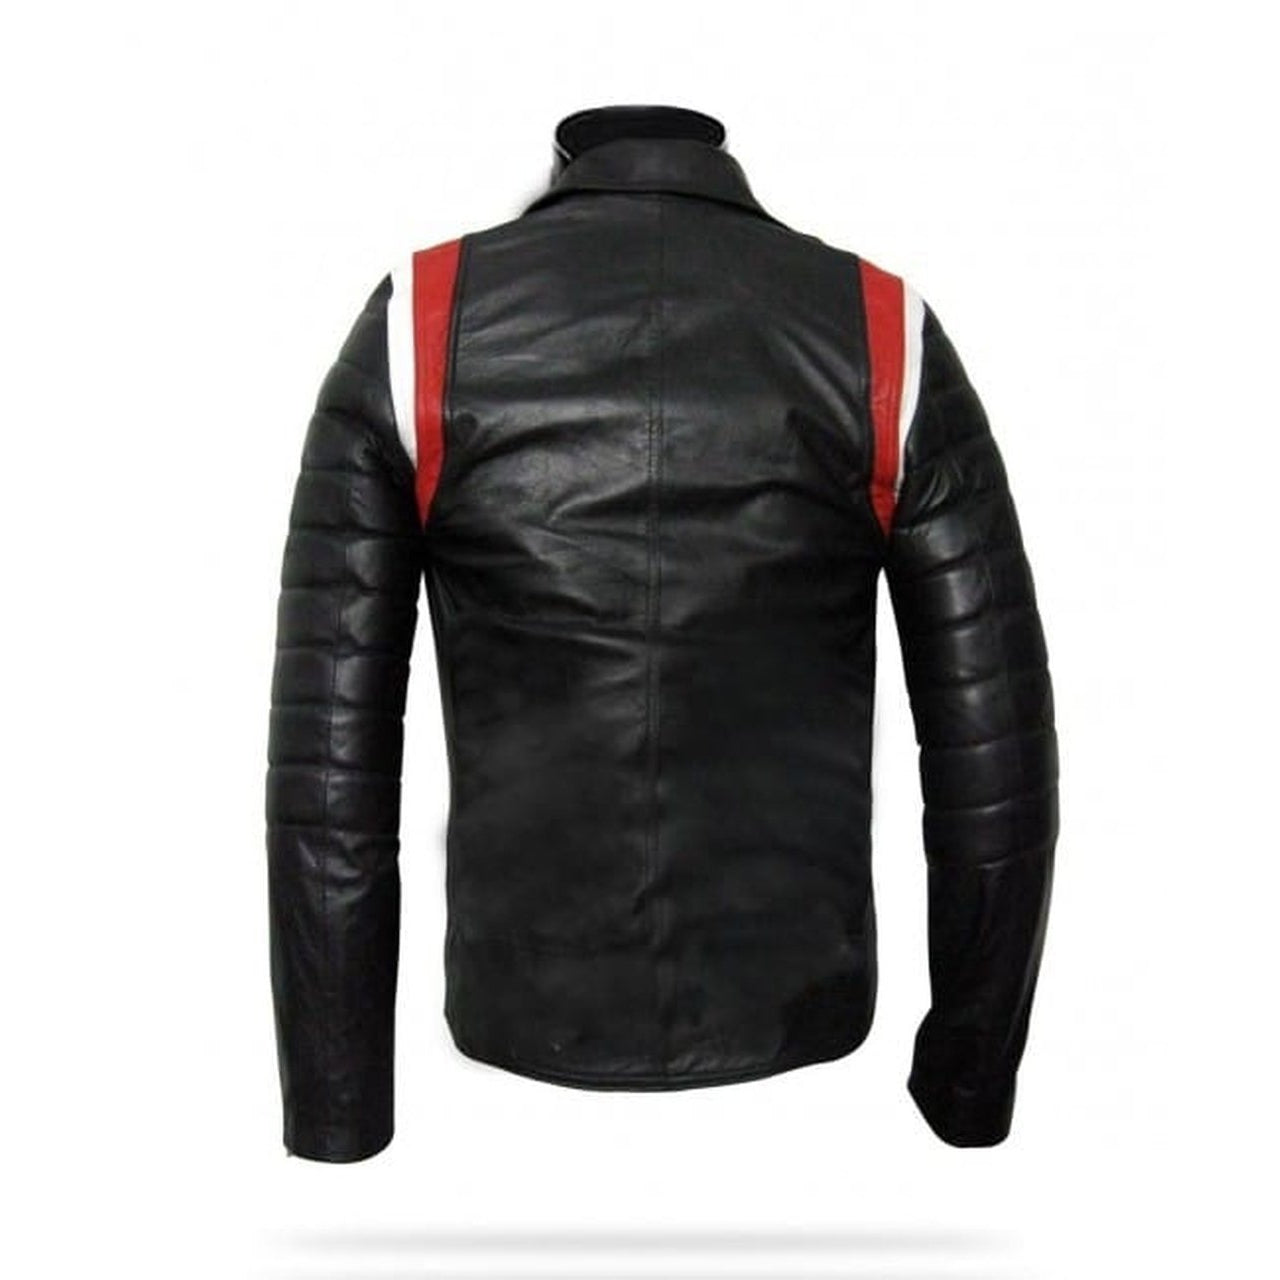 Style and Quality leather Jacket - Leather Jacket